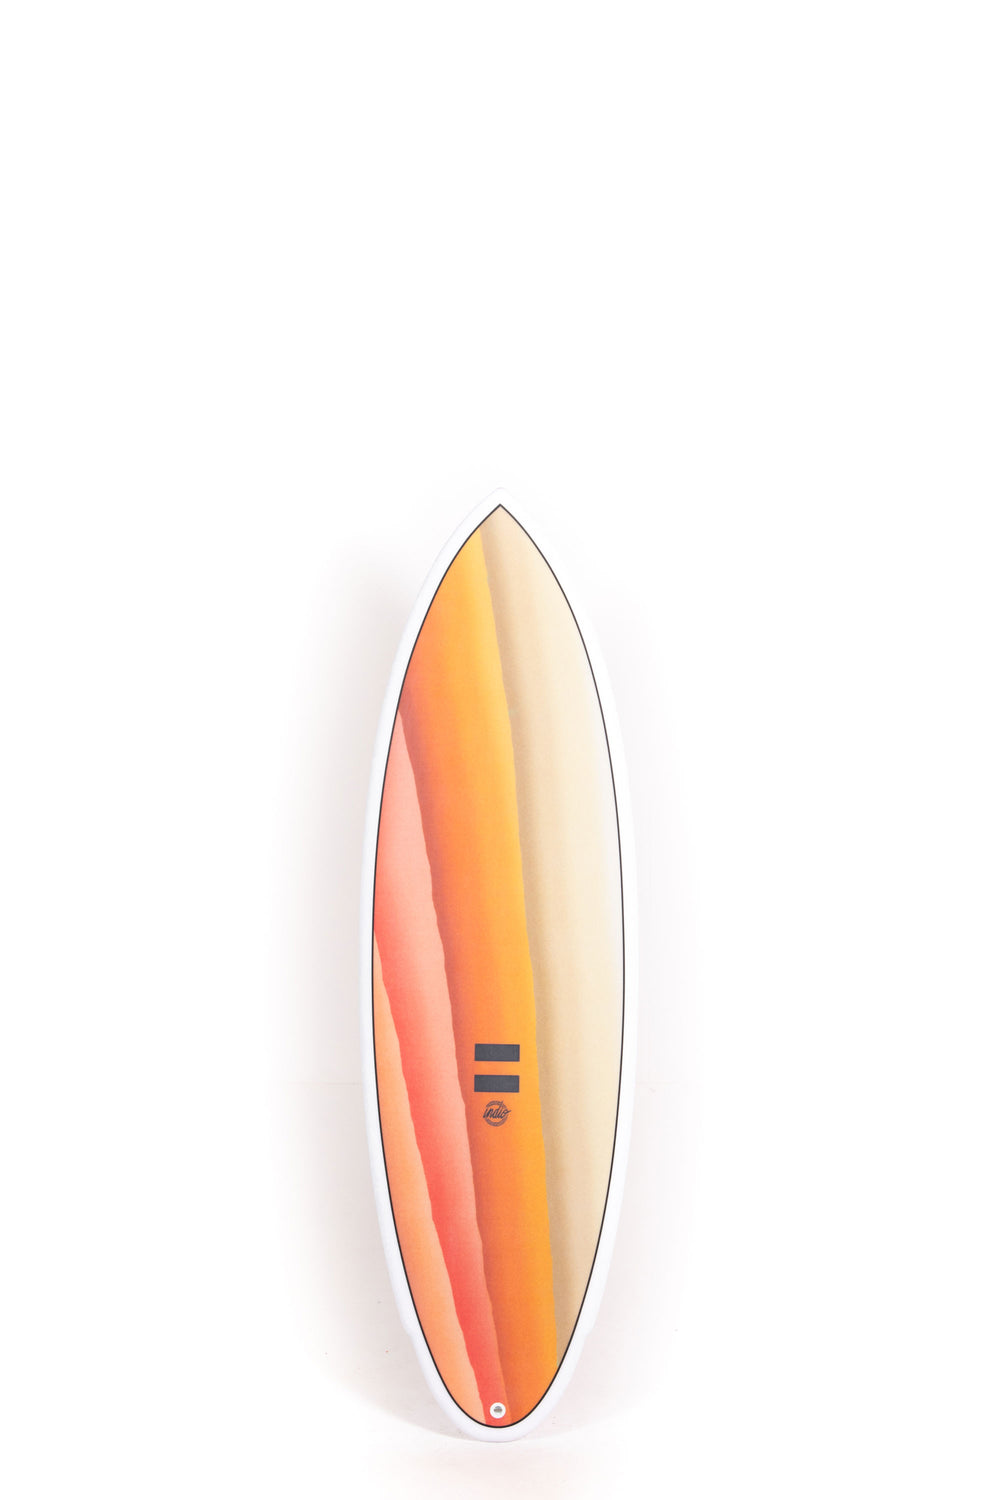 Pukas Surf Shop Indio Surfboards Rancho India Gold 5'10